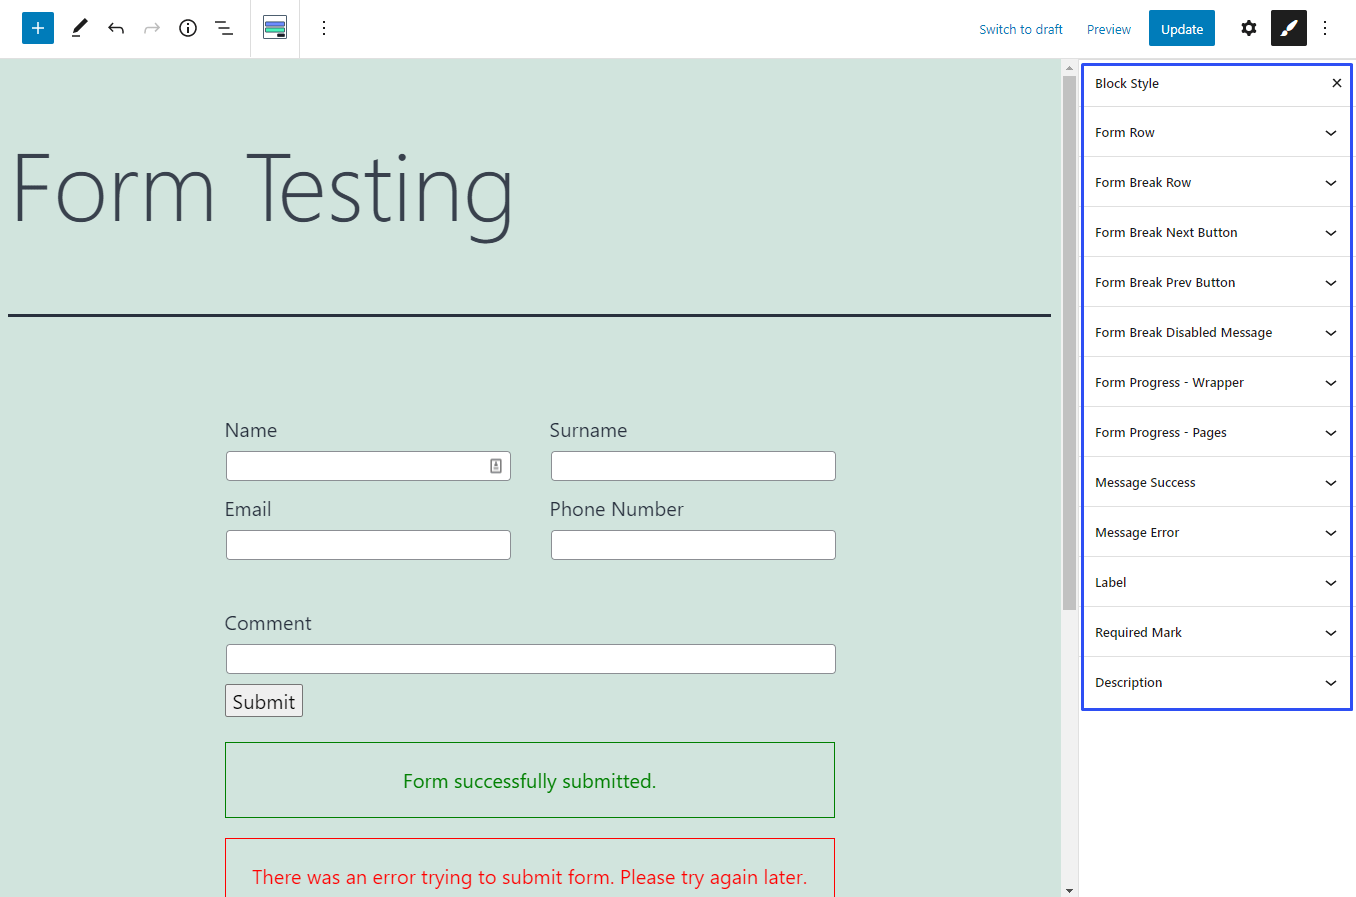 https://jetformbuilder.com/wp-content/uploads/2021/05/form-style-settings-min.png